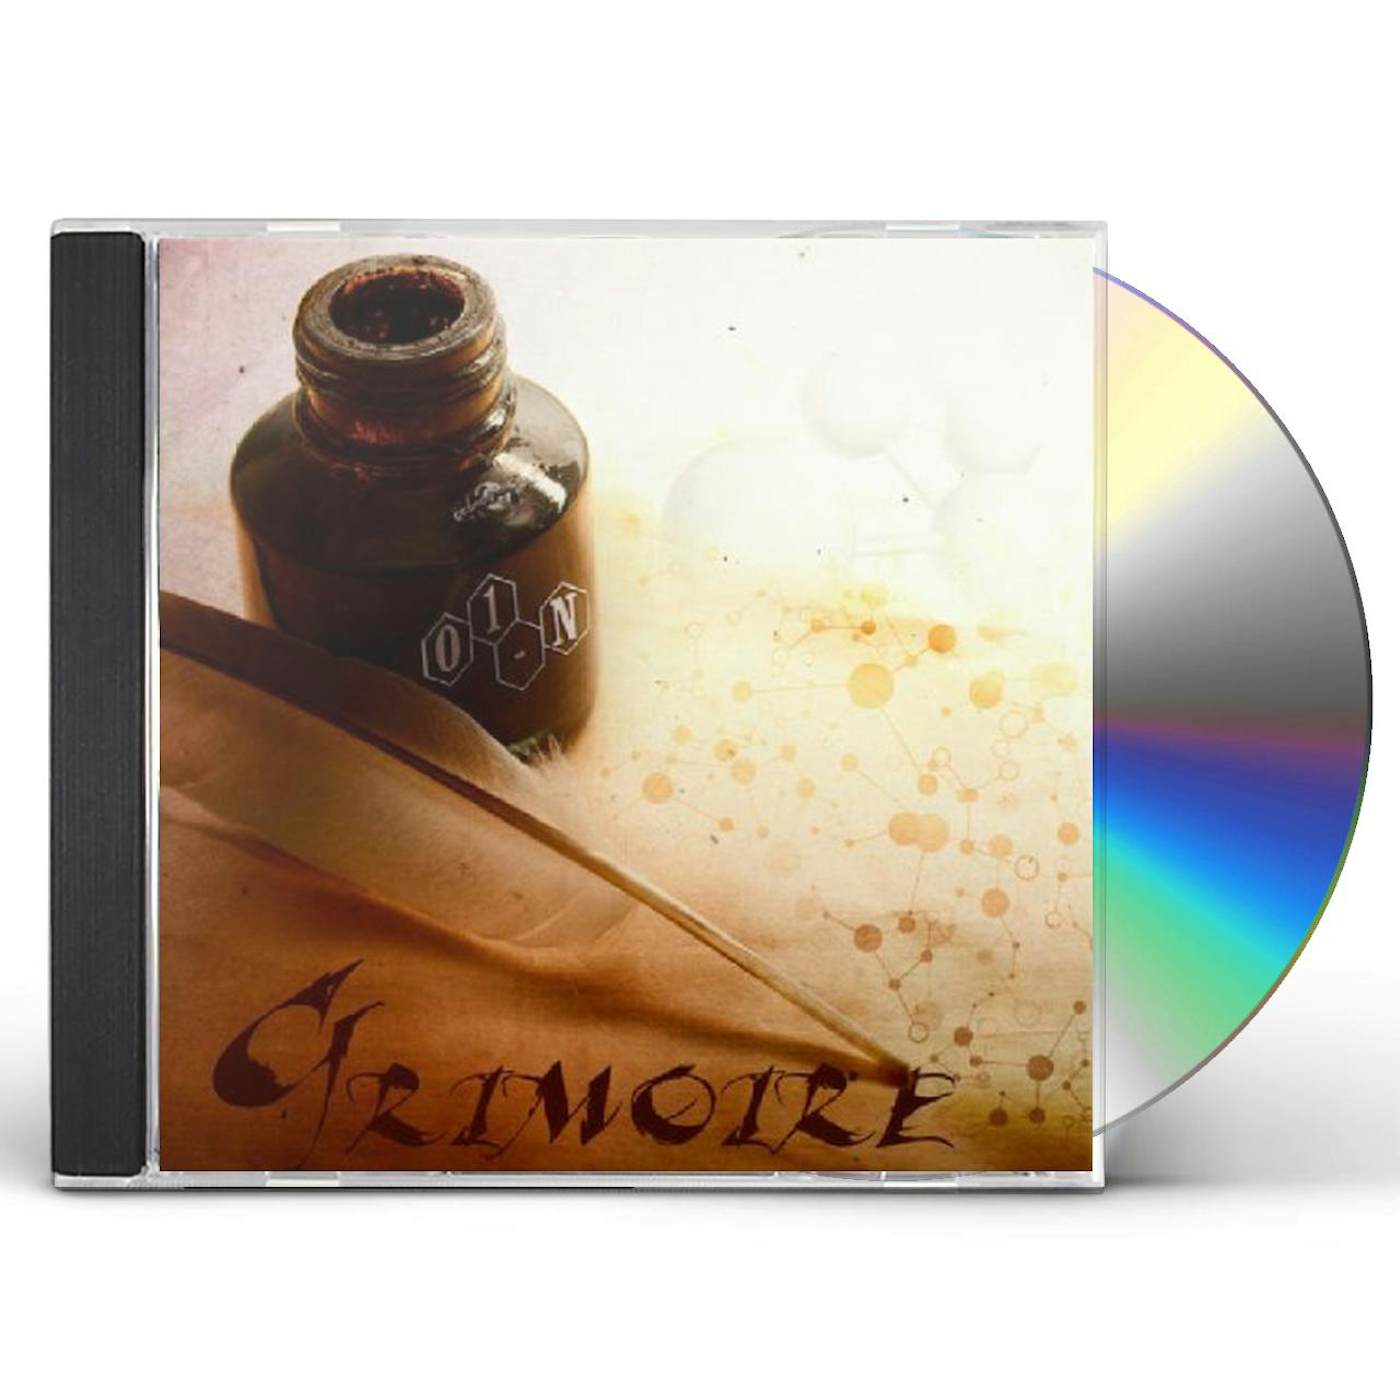 01-N GRIMOIRE CD